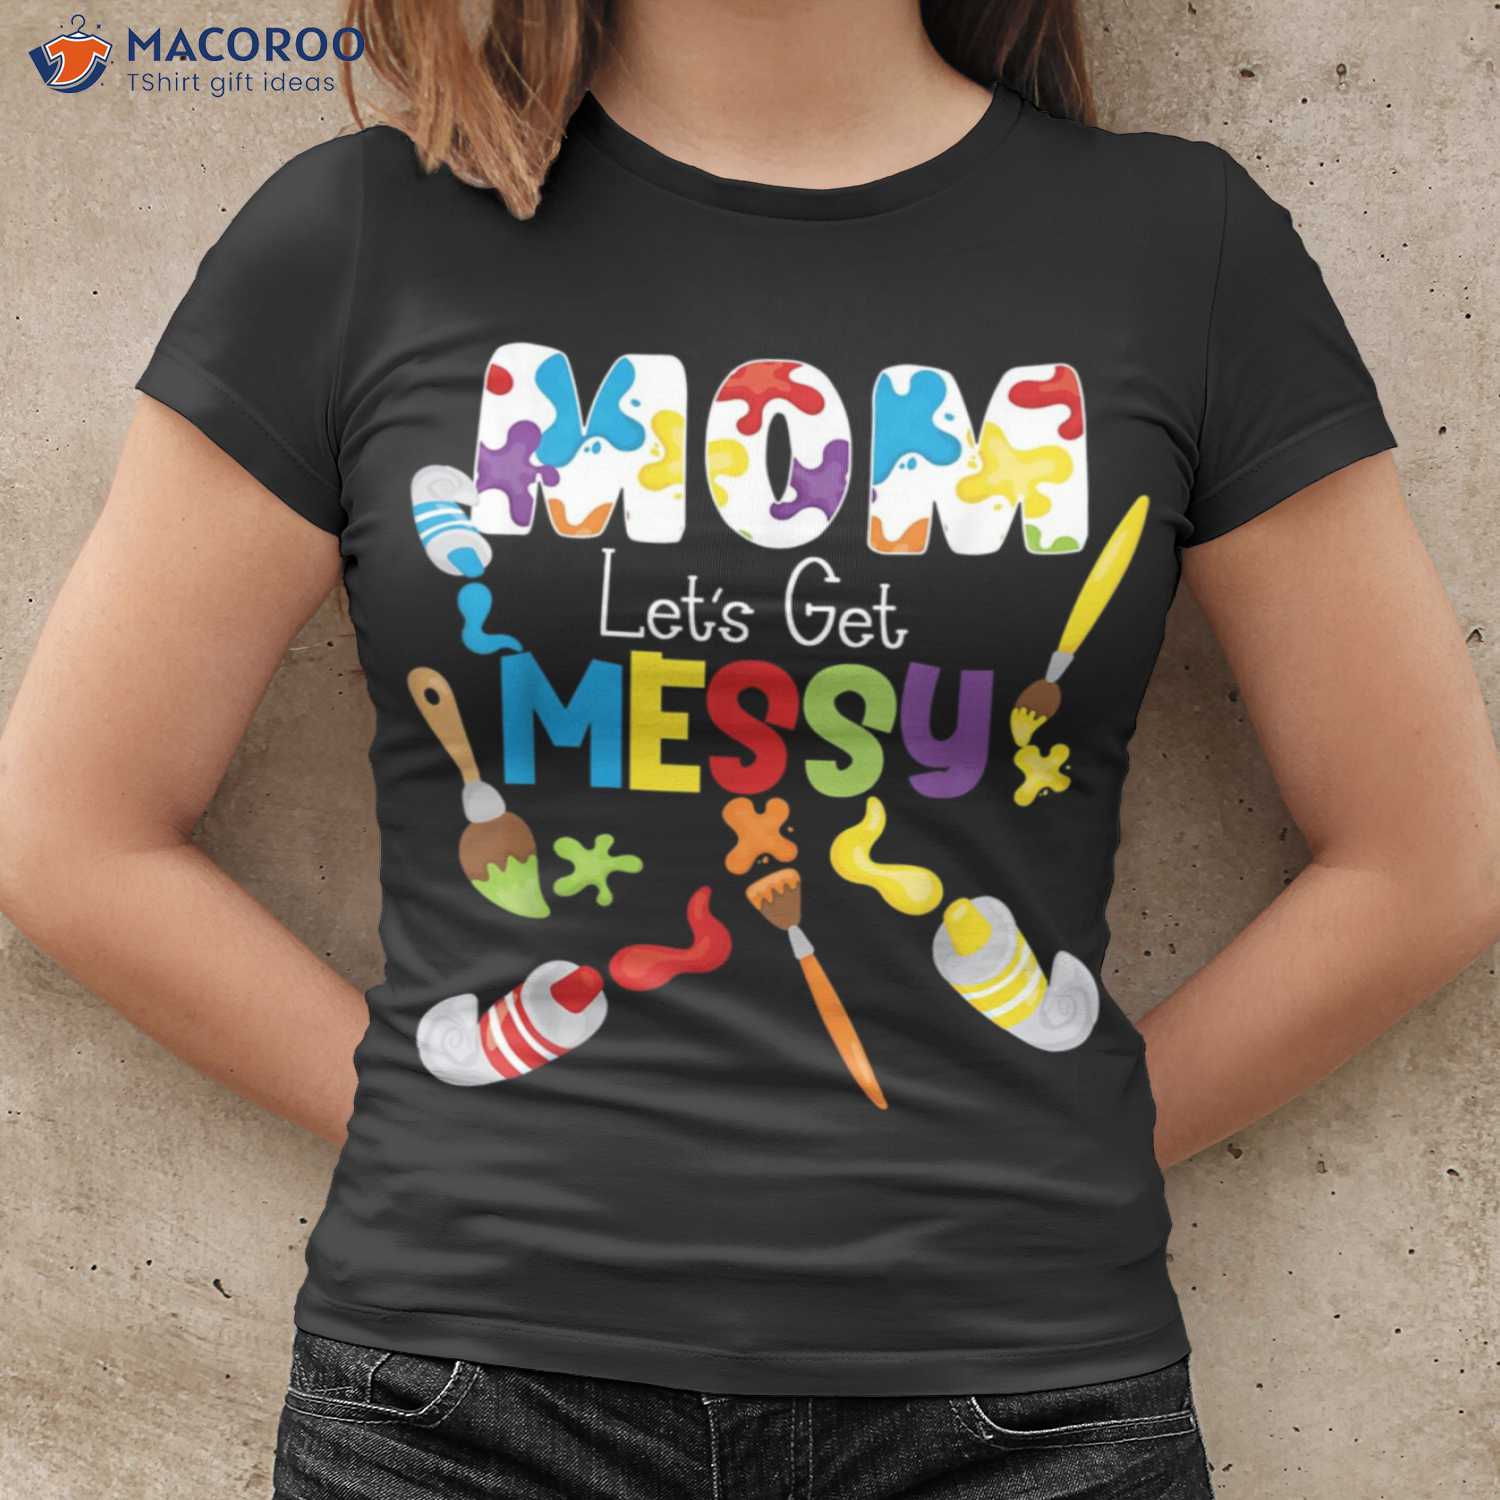 https://images.macoroo.com/wp-content/uploads/2023/03/mom-artist-let-s-get-messy-sentimental-birthday-gifts-for-mom-t-shirt-women-cool.jpg